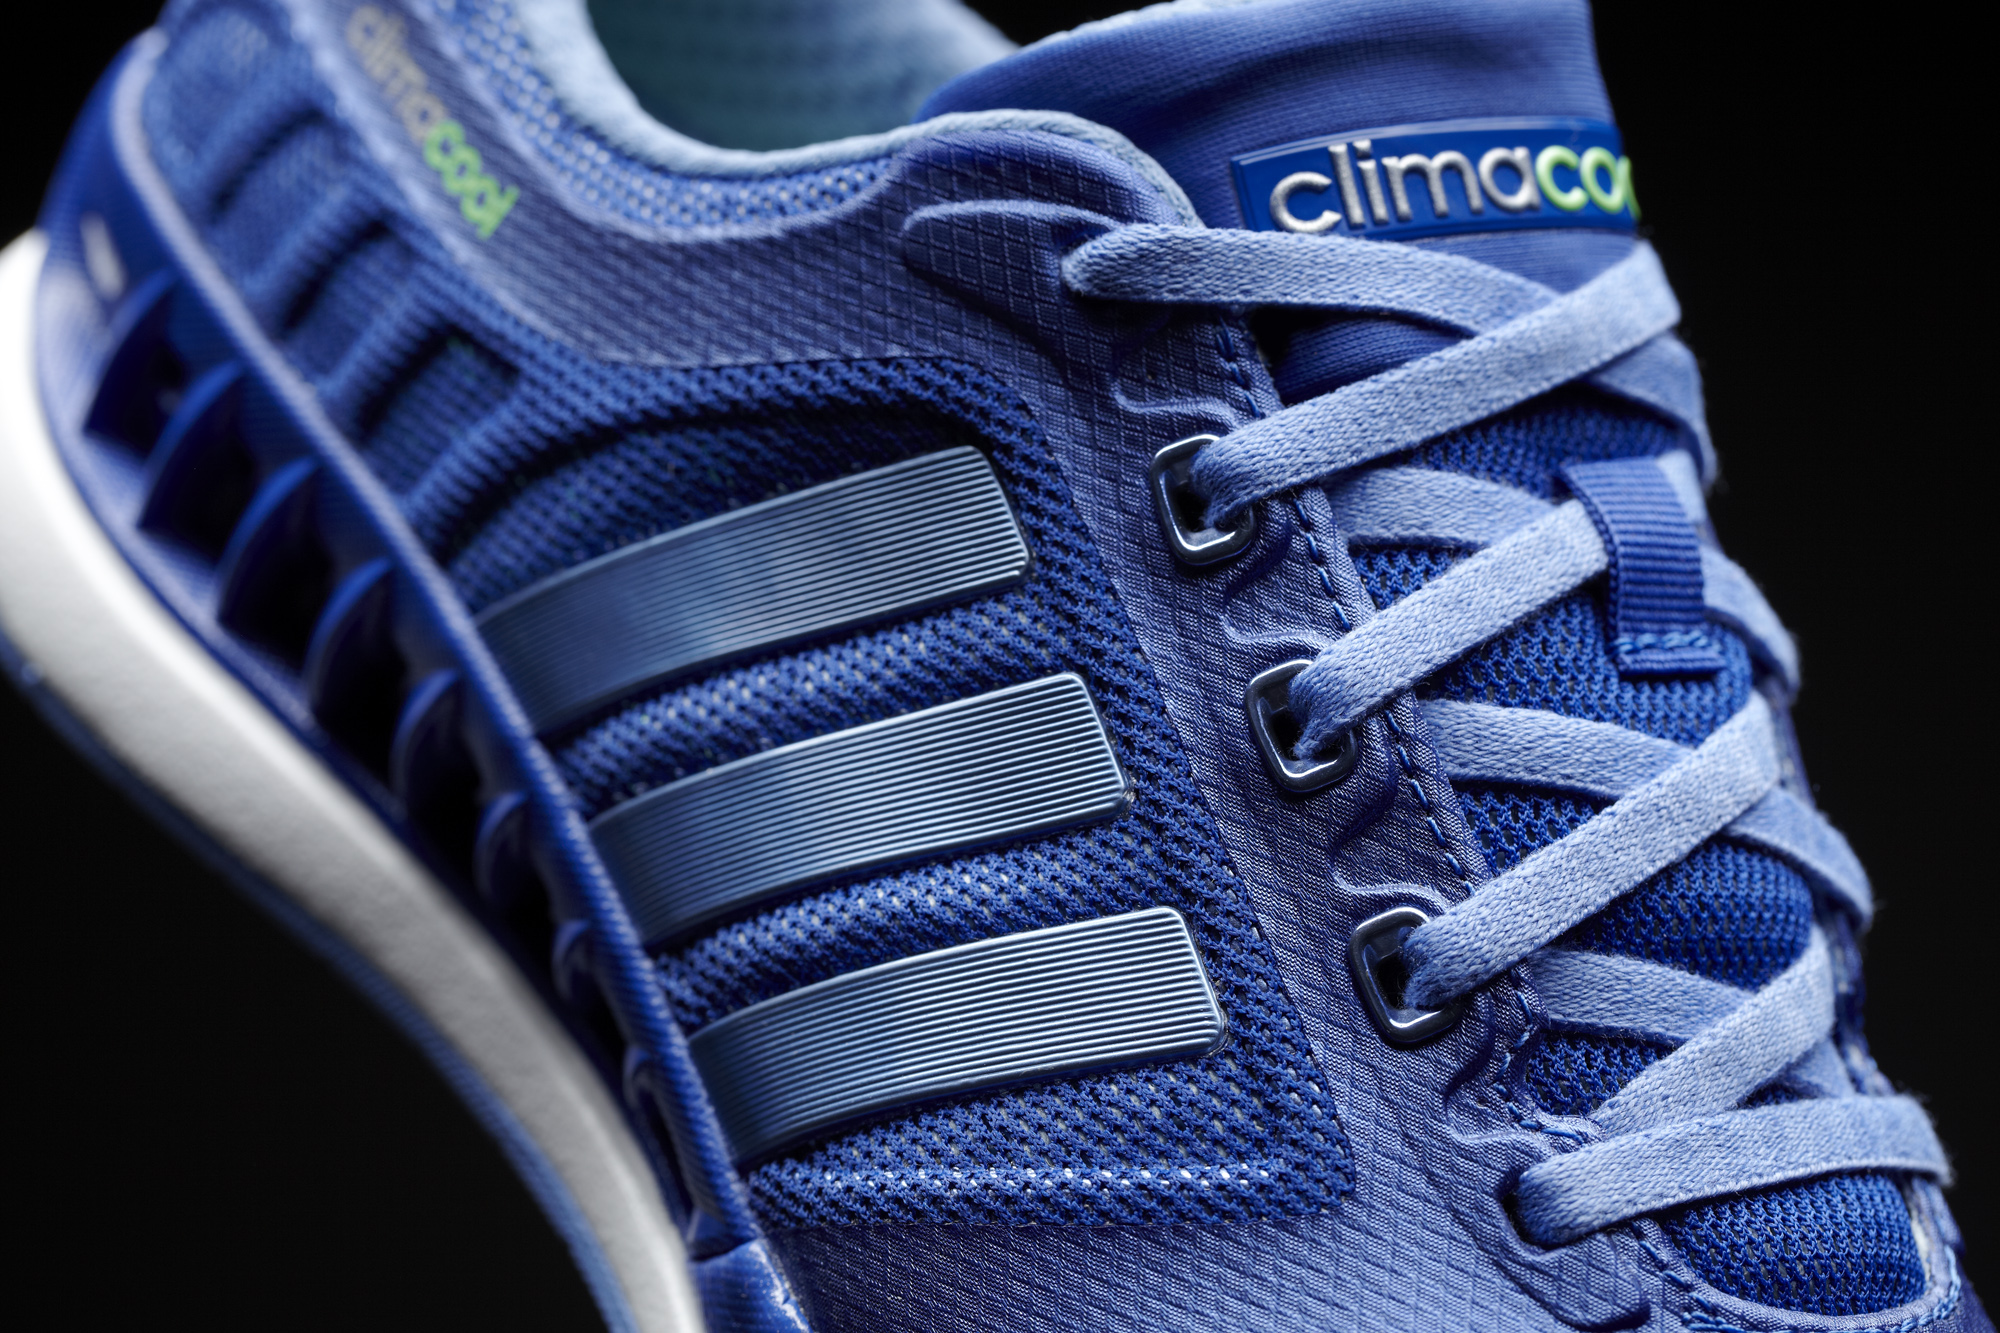 adidas Climacool Revolution 2013 | Pinoy Fitness